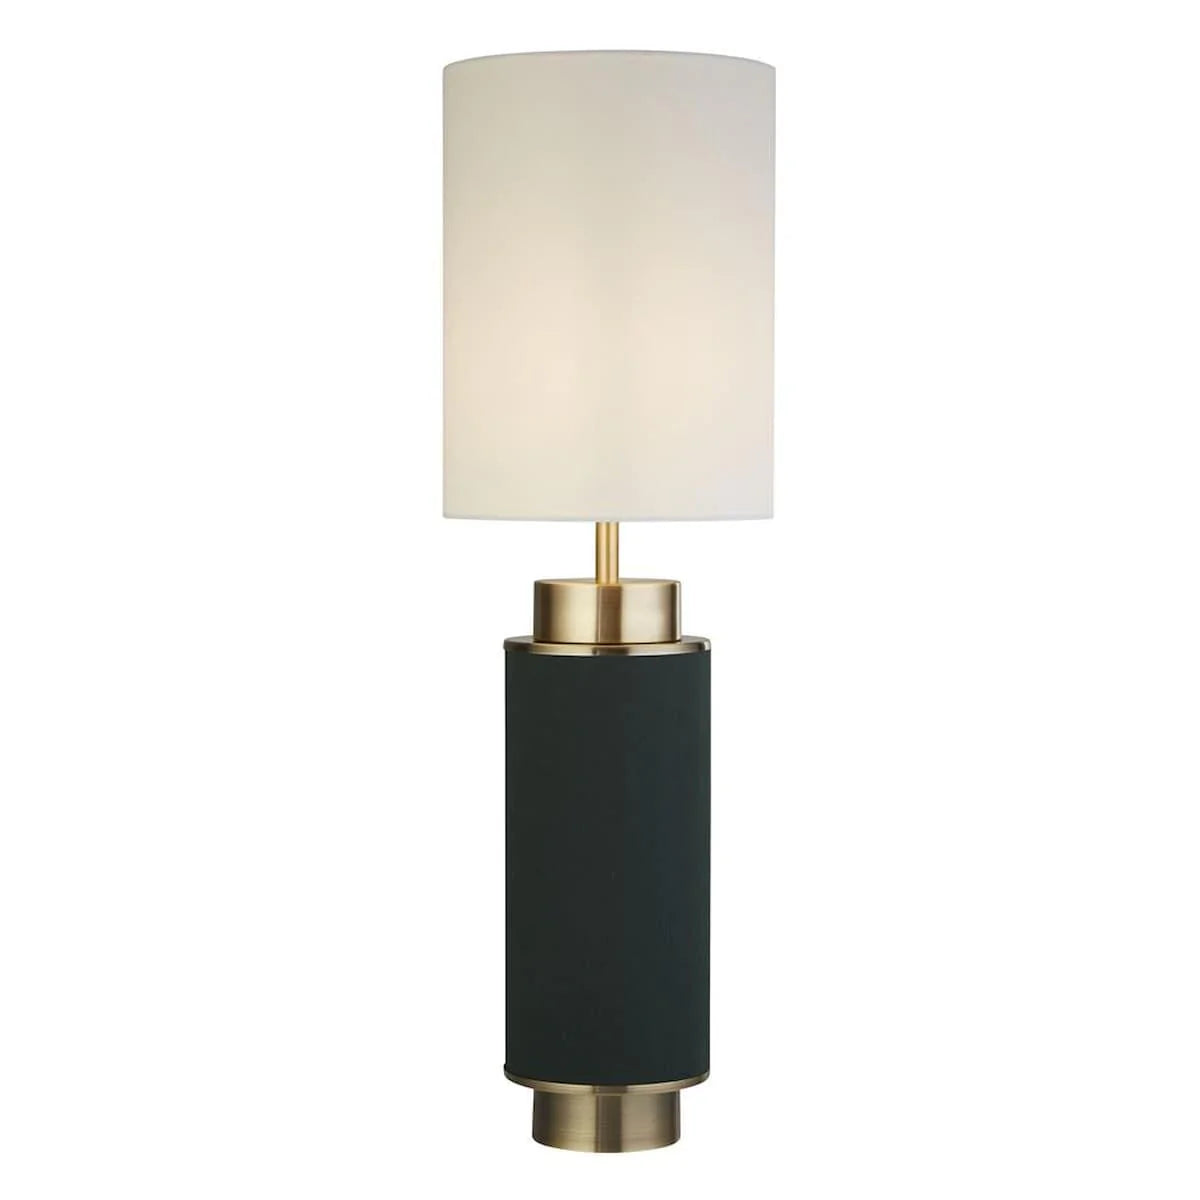 FLASK TABLE LAMP - DARK GREEN & ANTIQUE BRASS, WHITE SHADE 59041AB - Peter Murphy Lighting & Electrical Ltd